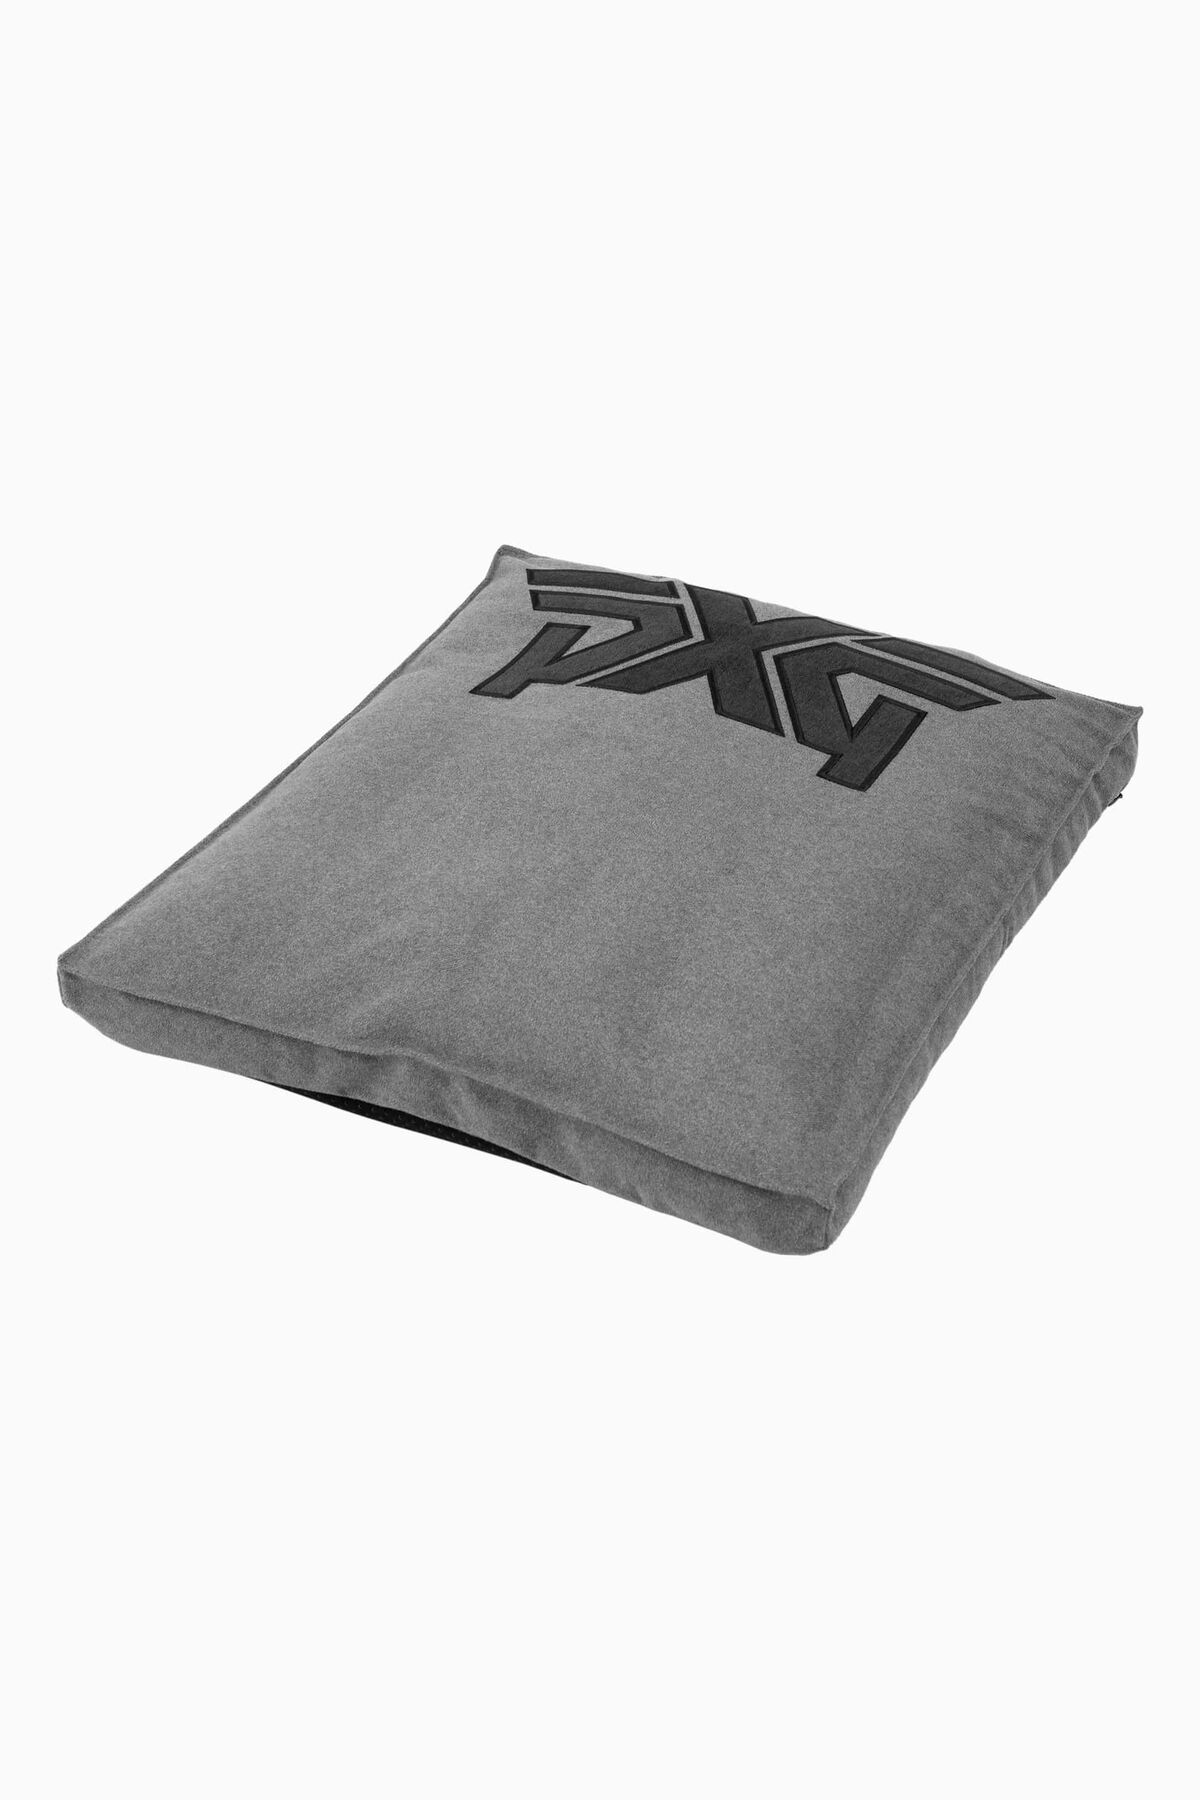 PXG Logo Pet Cushion 